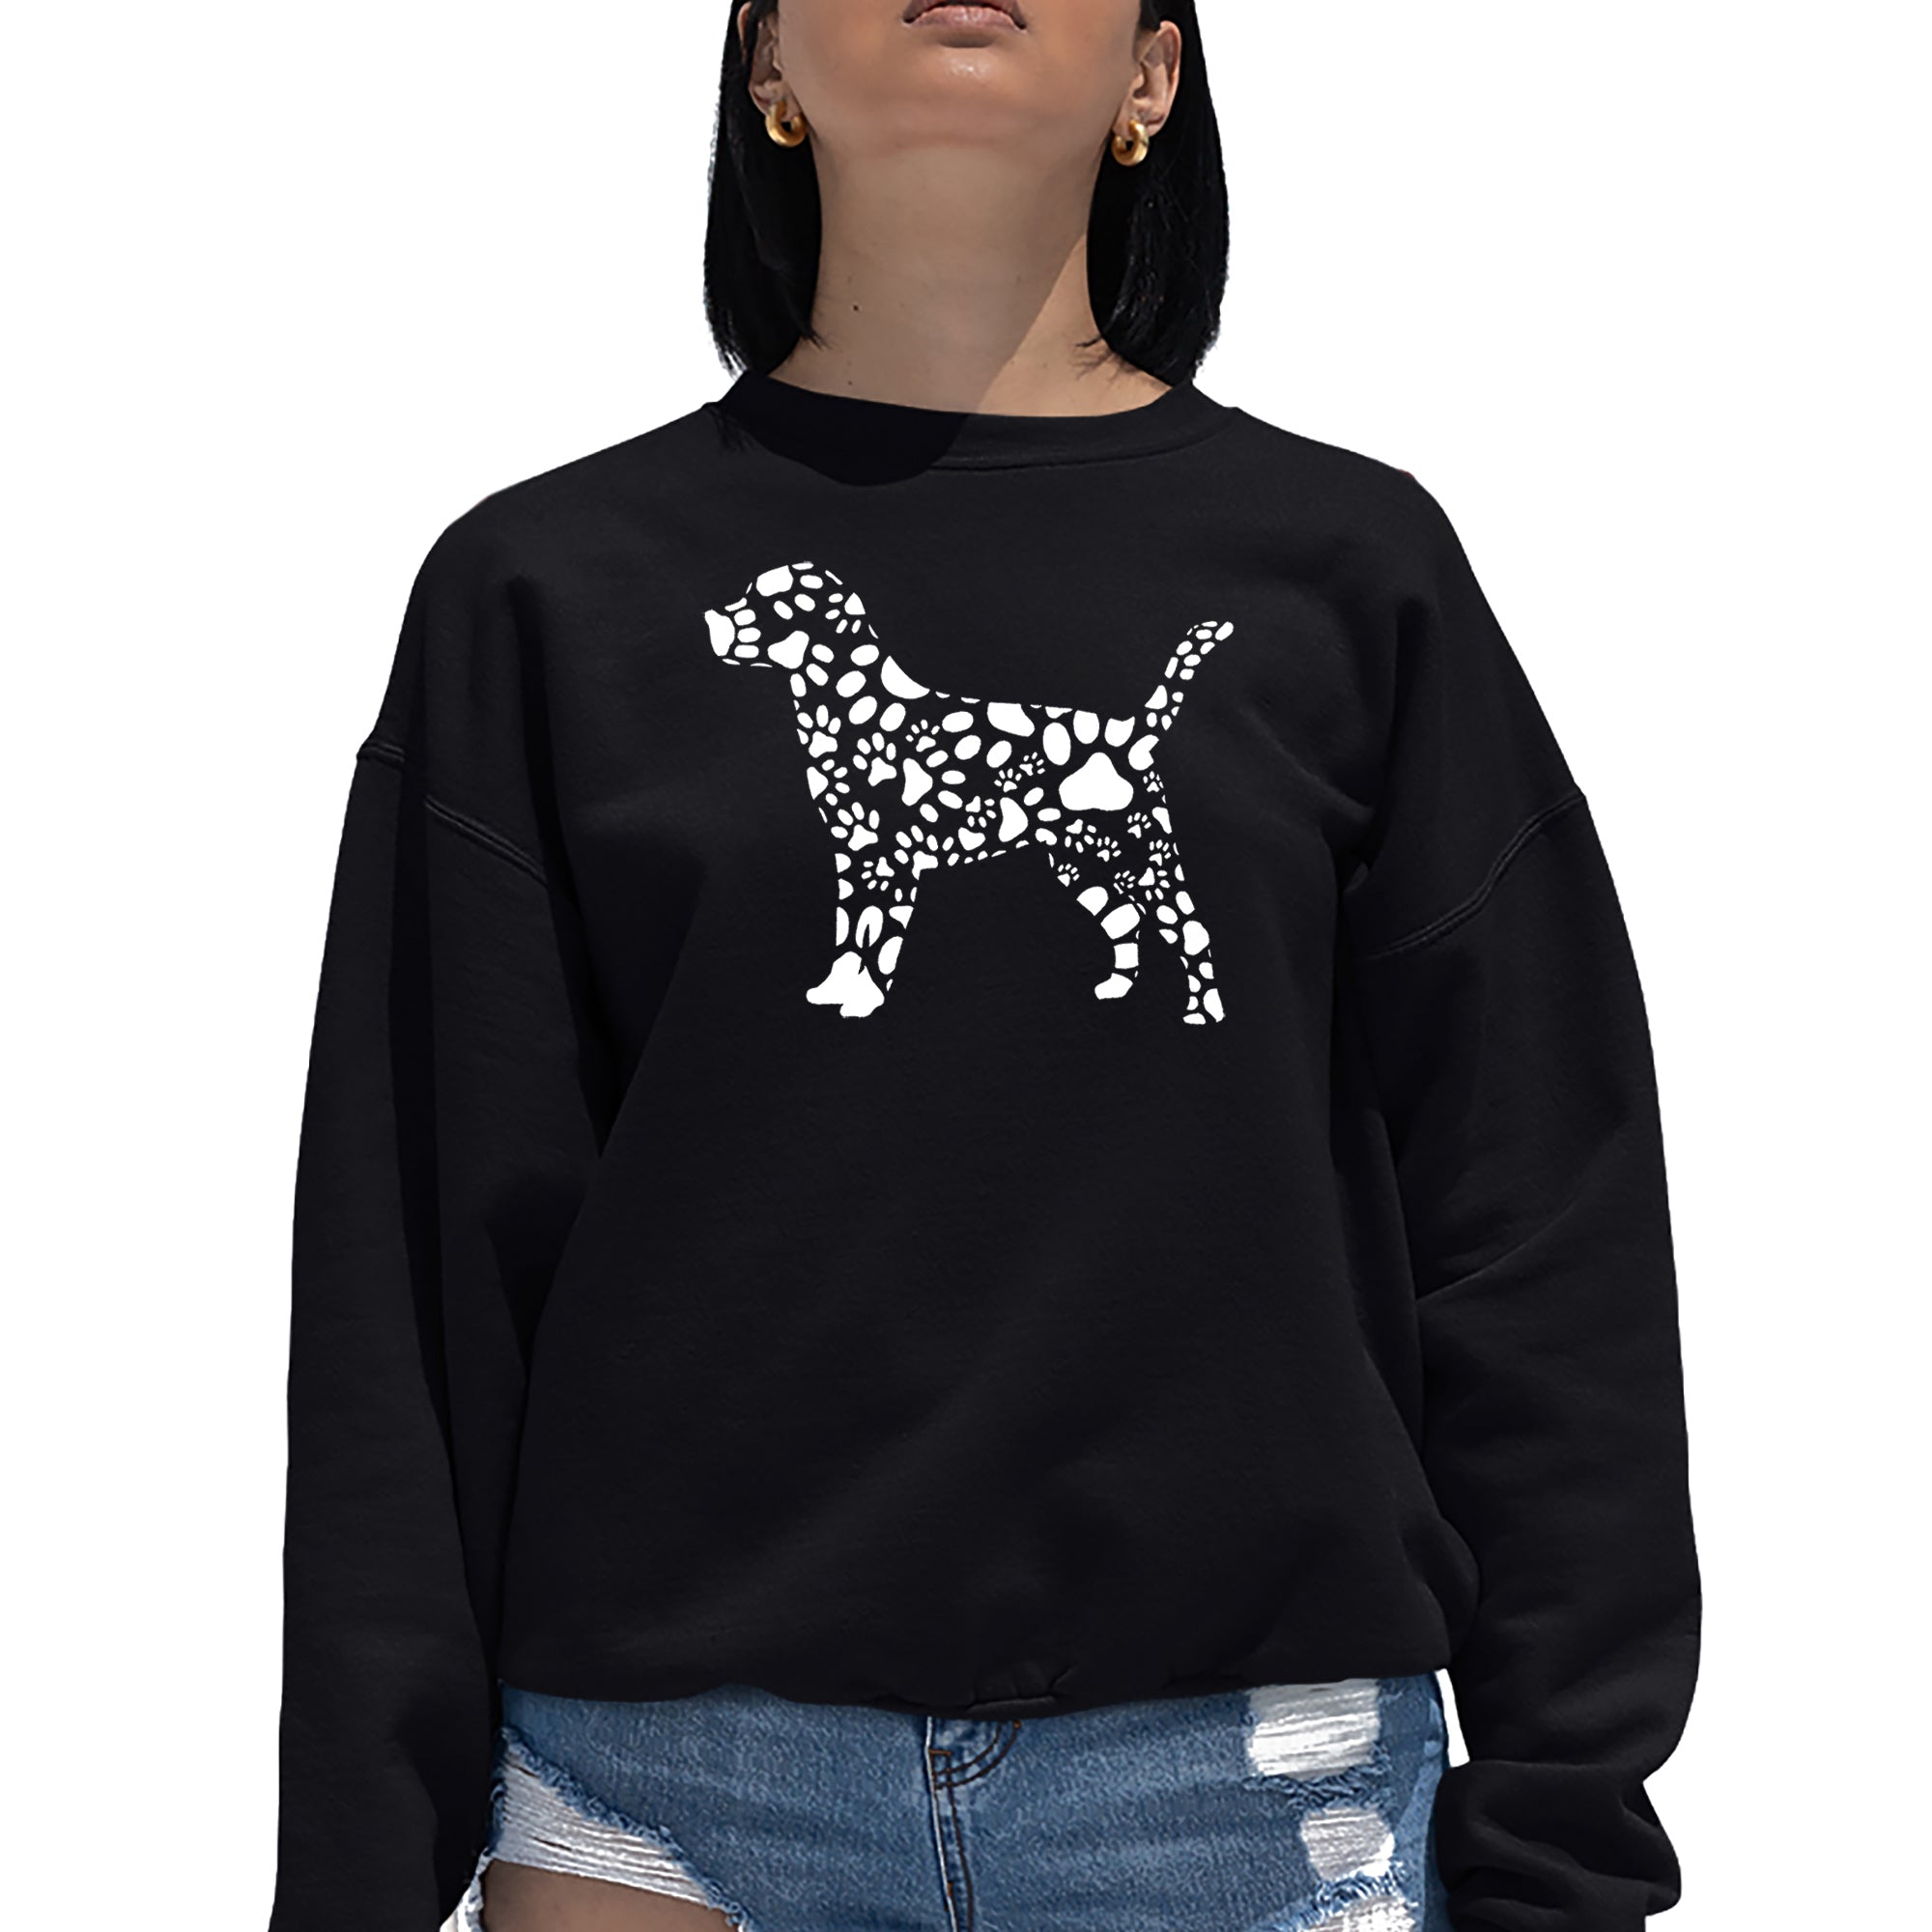 Dog Paw Prints - Women's Word Art Crewneck Sweatshirt - Black - Small